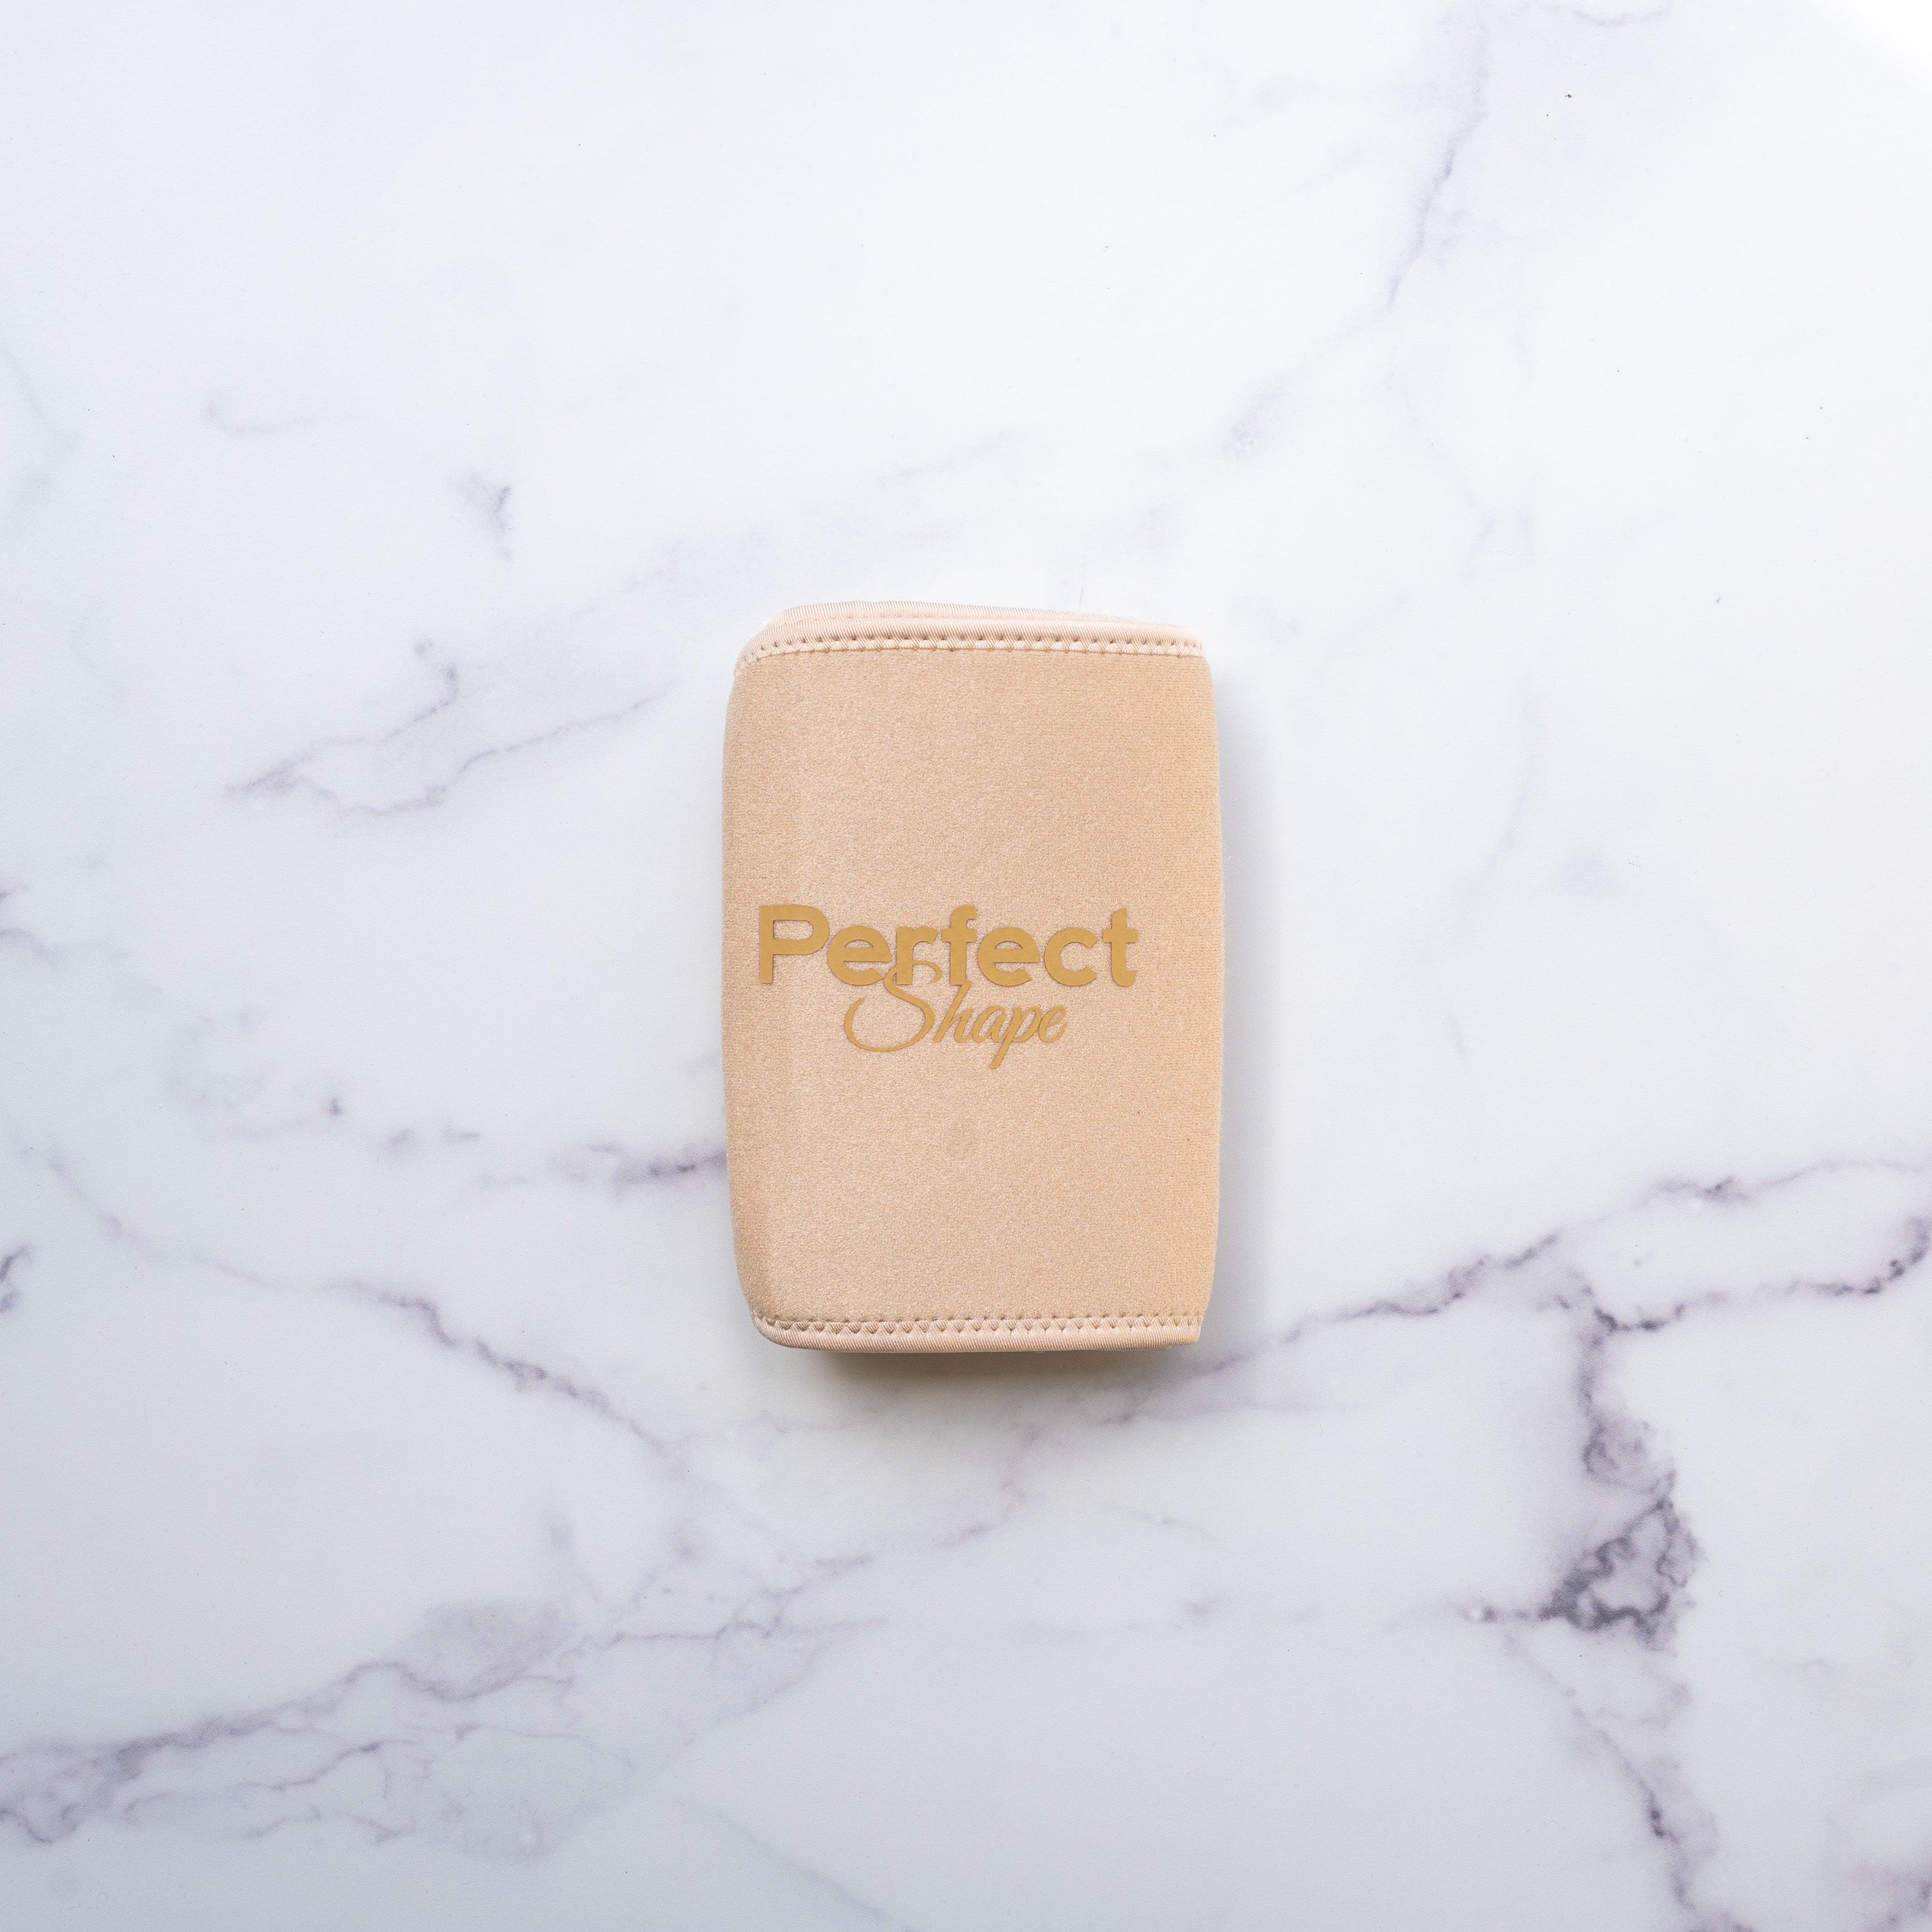 Perfect Shape Waist Trimmer – PerfectShape